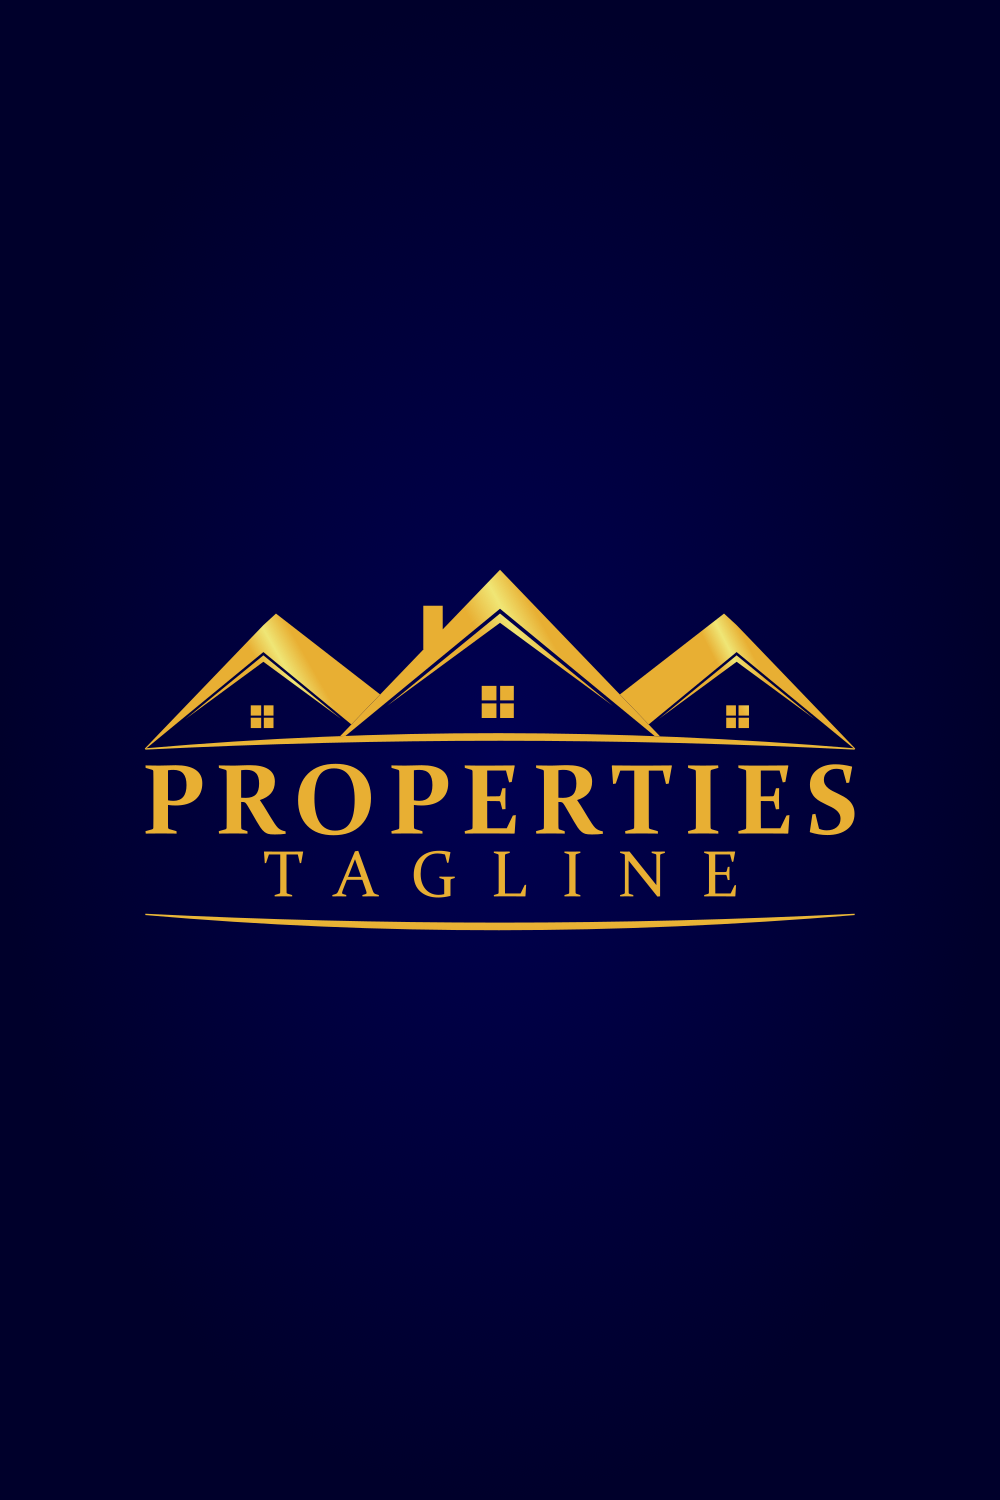 High Rise Properties Logo Design Template pinterest image.